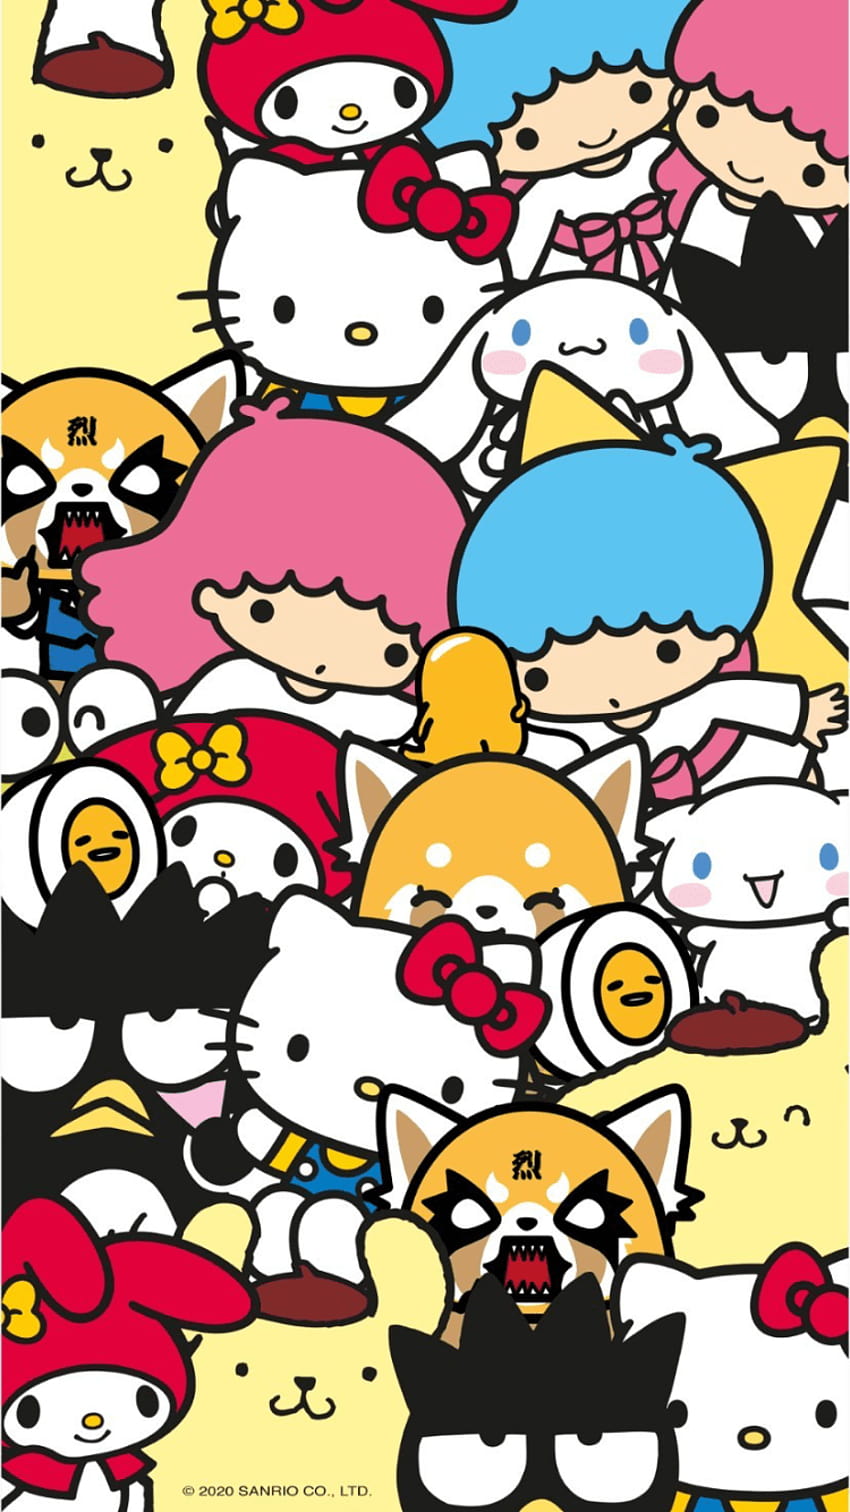 4K Sanrio Wallpaper fanart for iPhone - Download